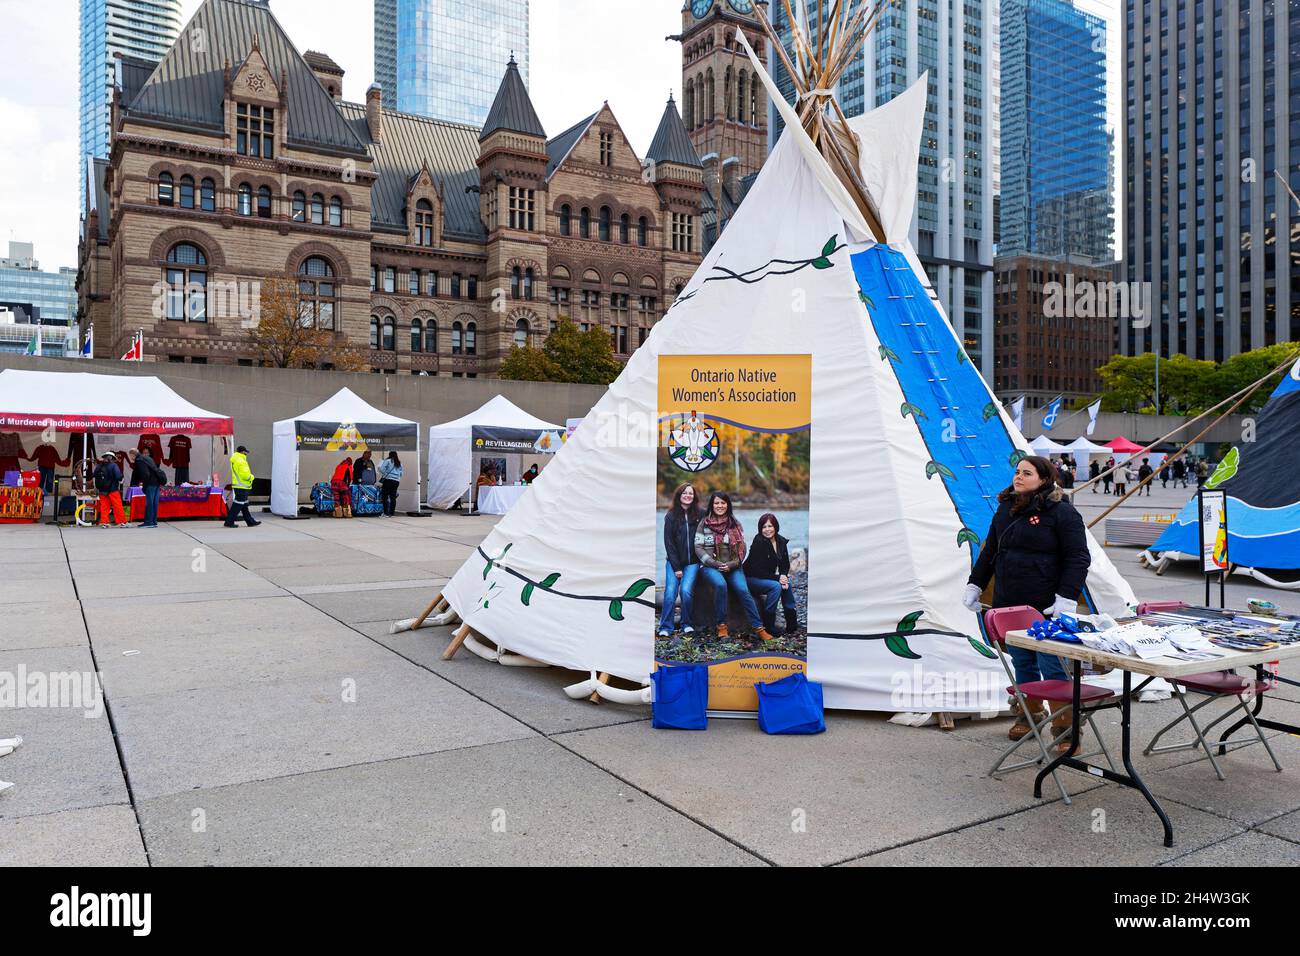 Tipi, Indigenous Legacy Gathering, am 4. November 2021 in Toronto, Nathan Phillips Square, Kanada Stockfoto